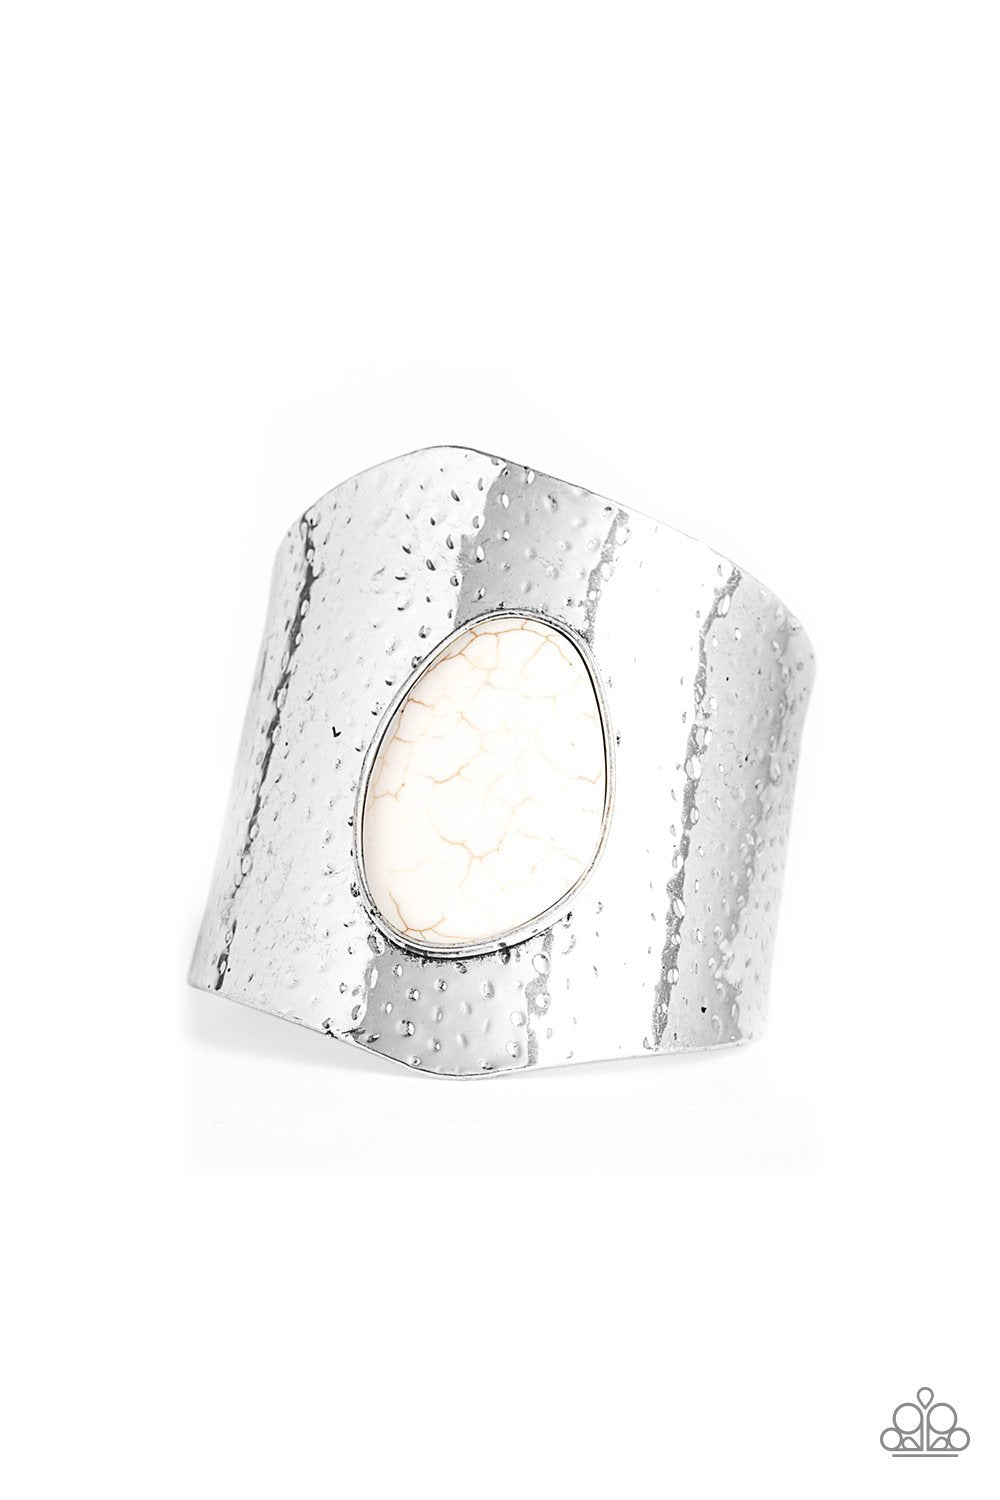 Casual Canyoneer - White Stone Bracelet - Paparazzi Accessories - GlaMarous Titi Jewels